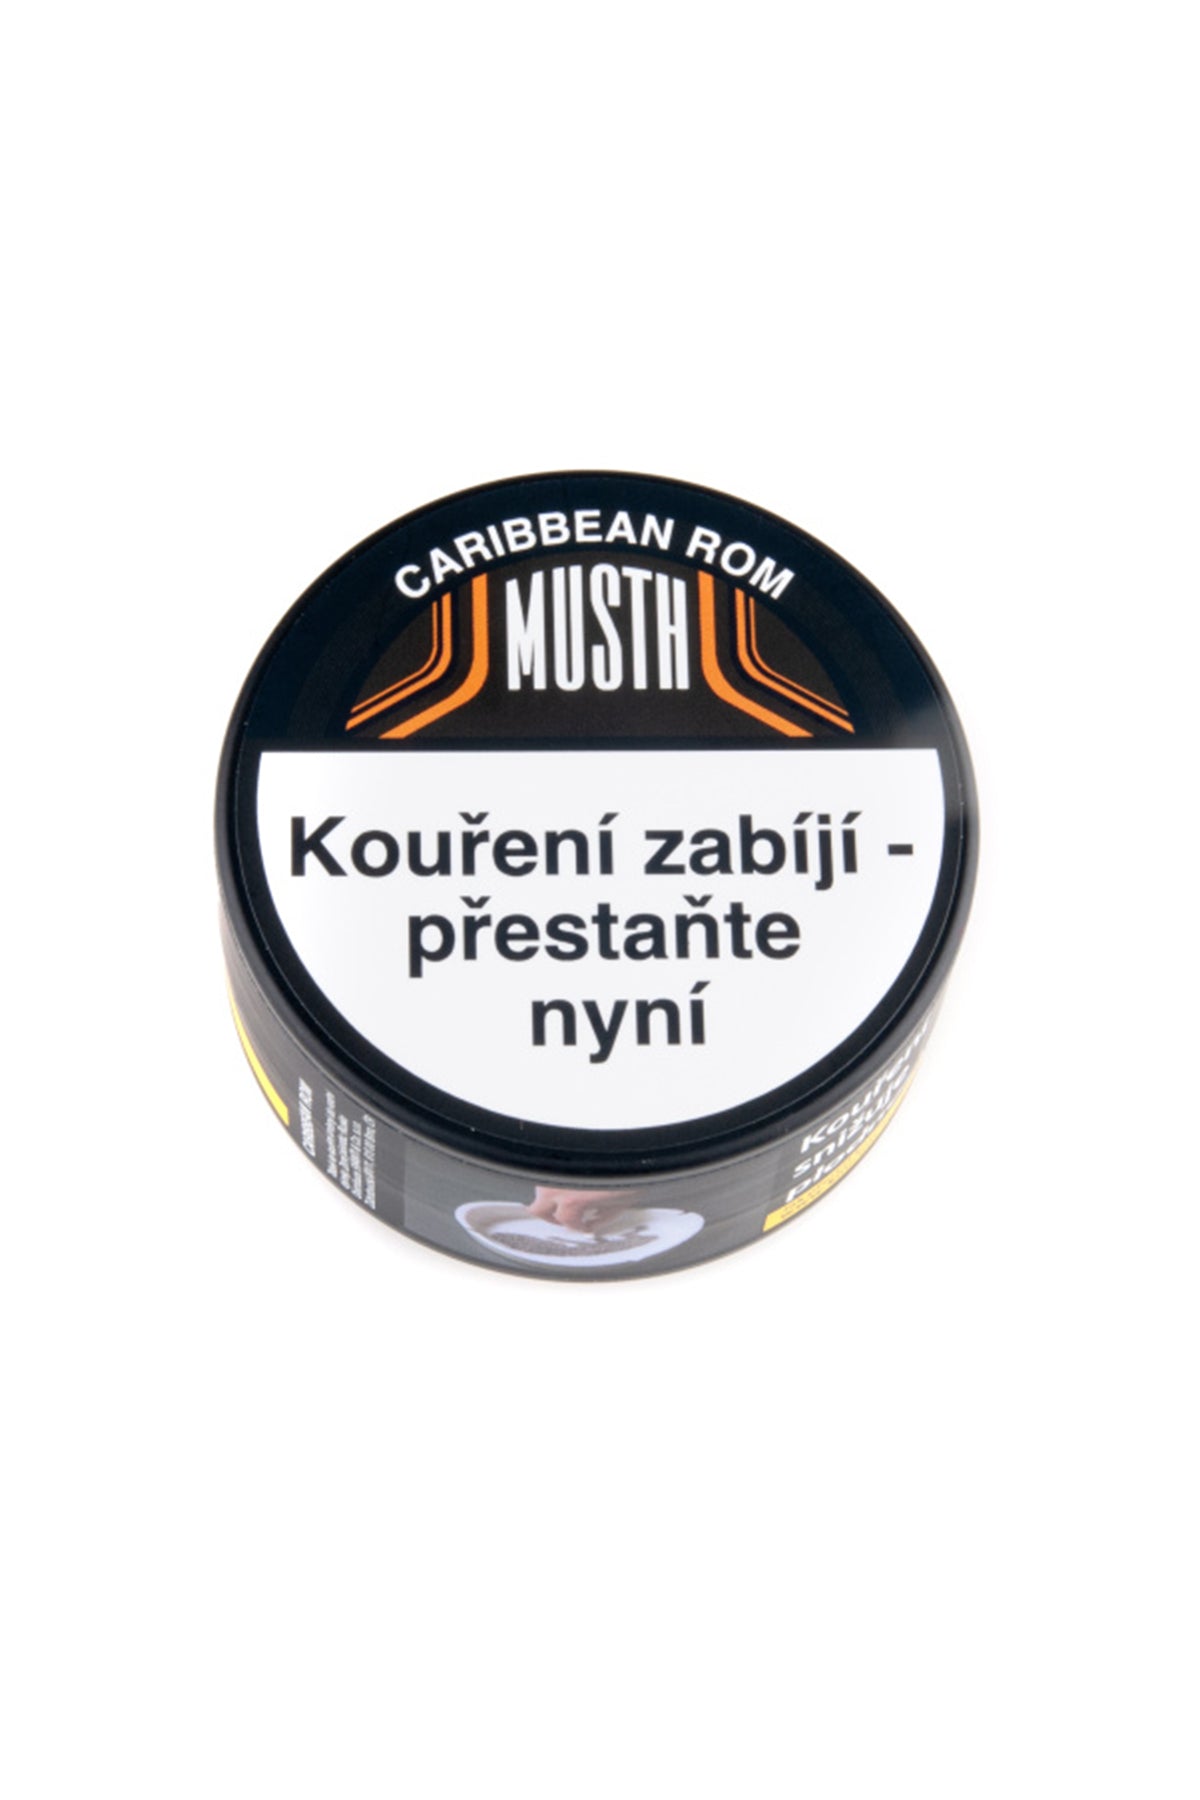 Tabák - MustH 40g - Caribbean Rom